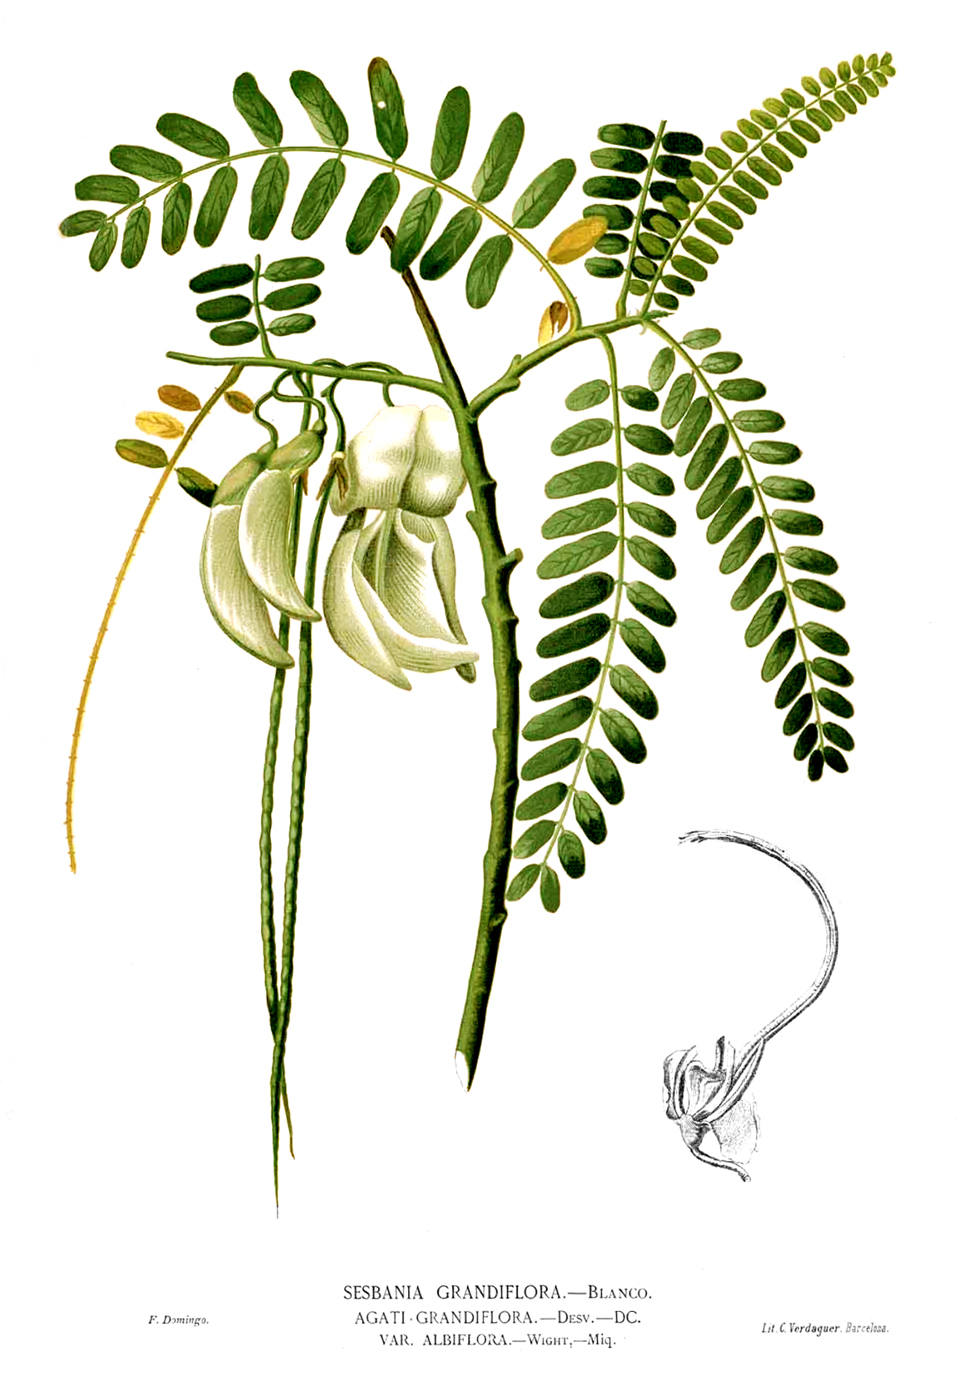 Description: Sesbania grandiflora